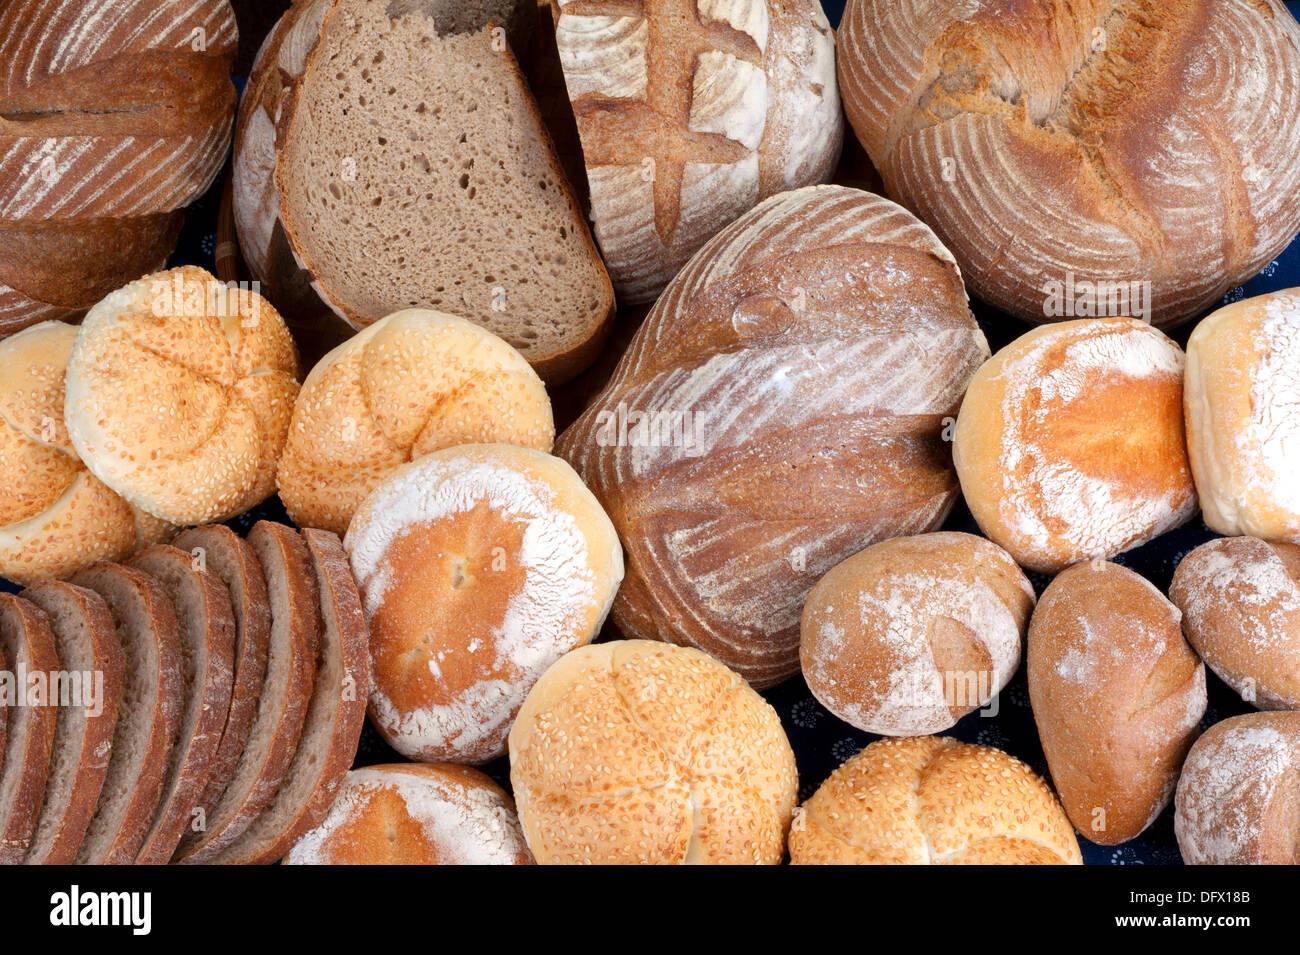 Brot, Brötchen - Bäckereiprodukte Stockfoto